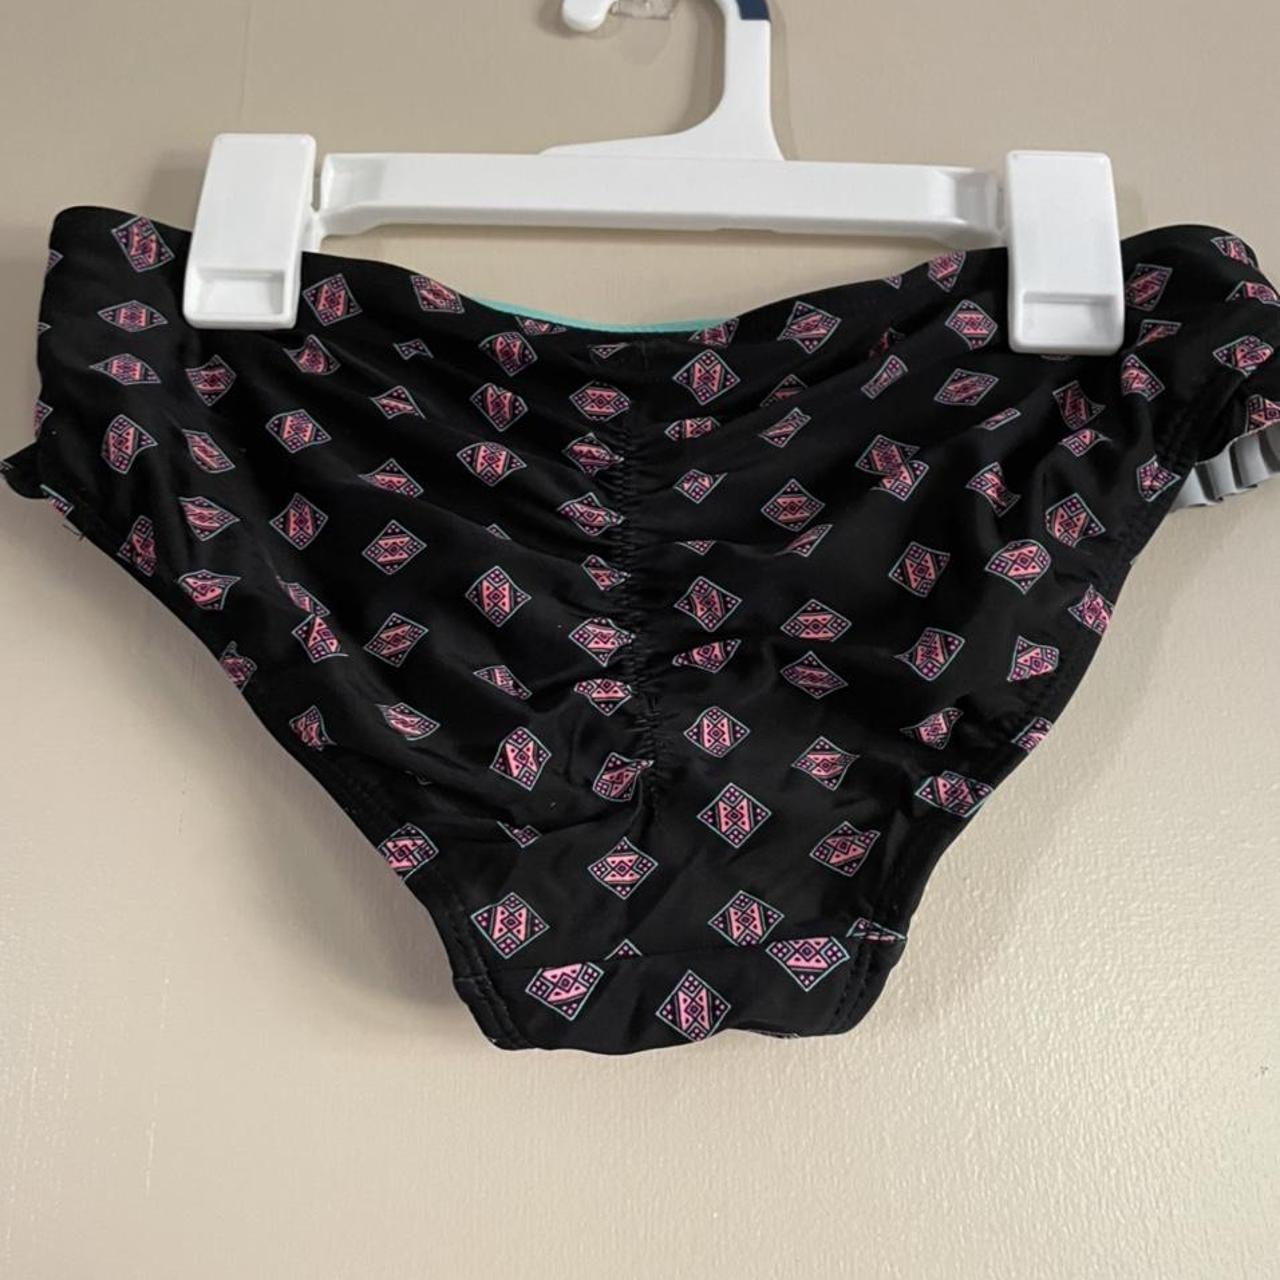 Product Image 2 - vintage ruffle cheeky bikini bottoms

DON’T